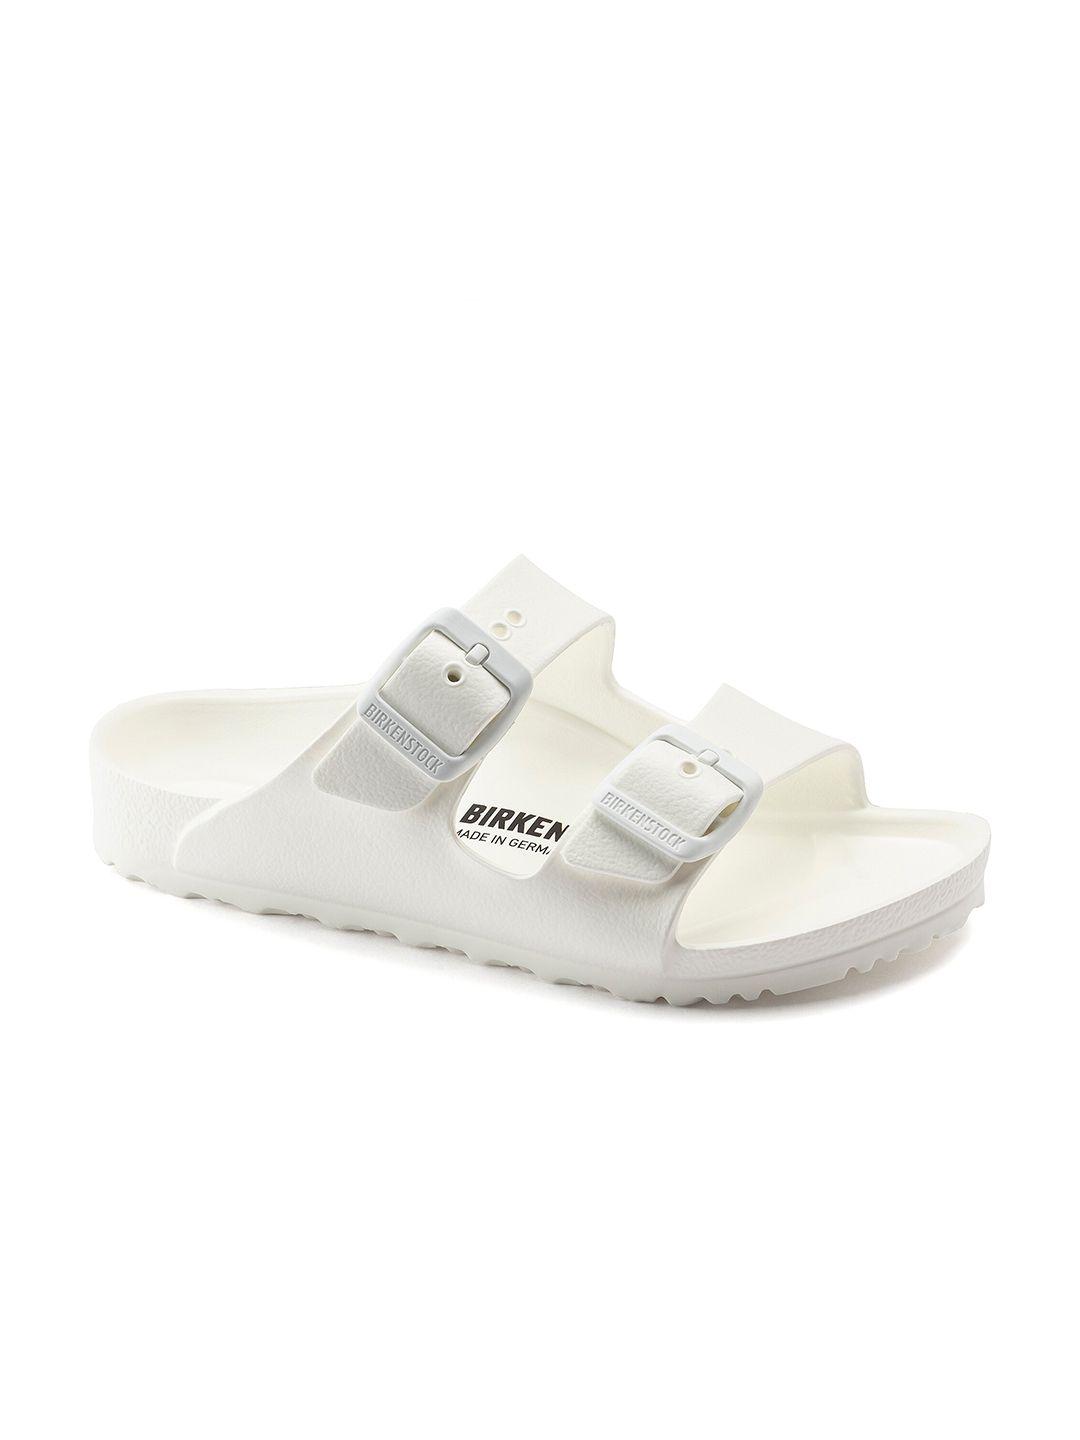 birkenstock girls arizona essentials white narrow-width open toe flats